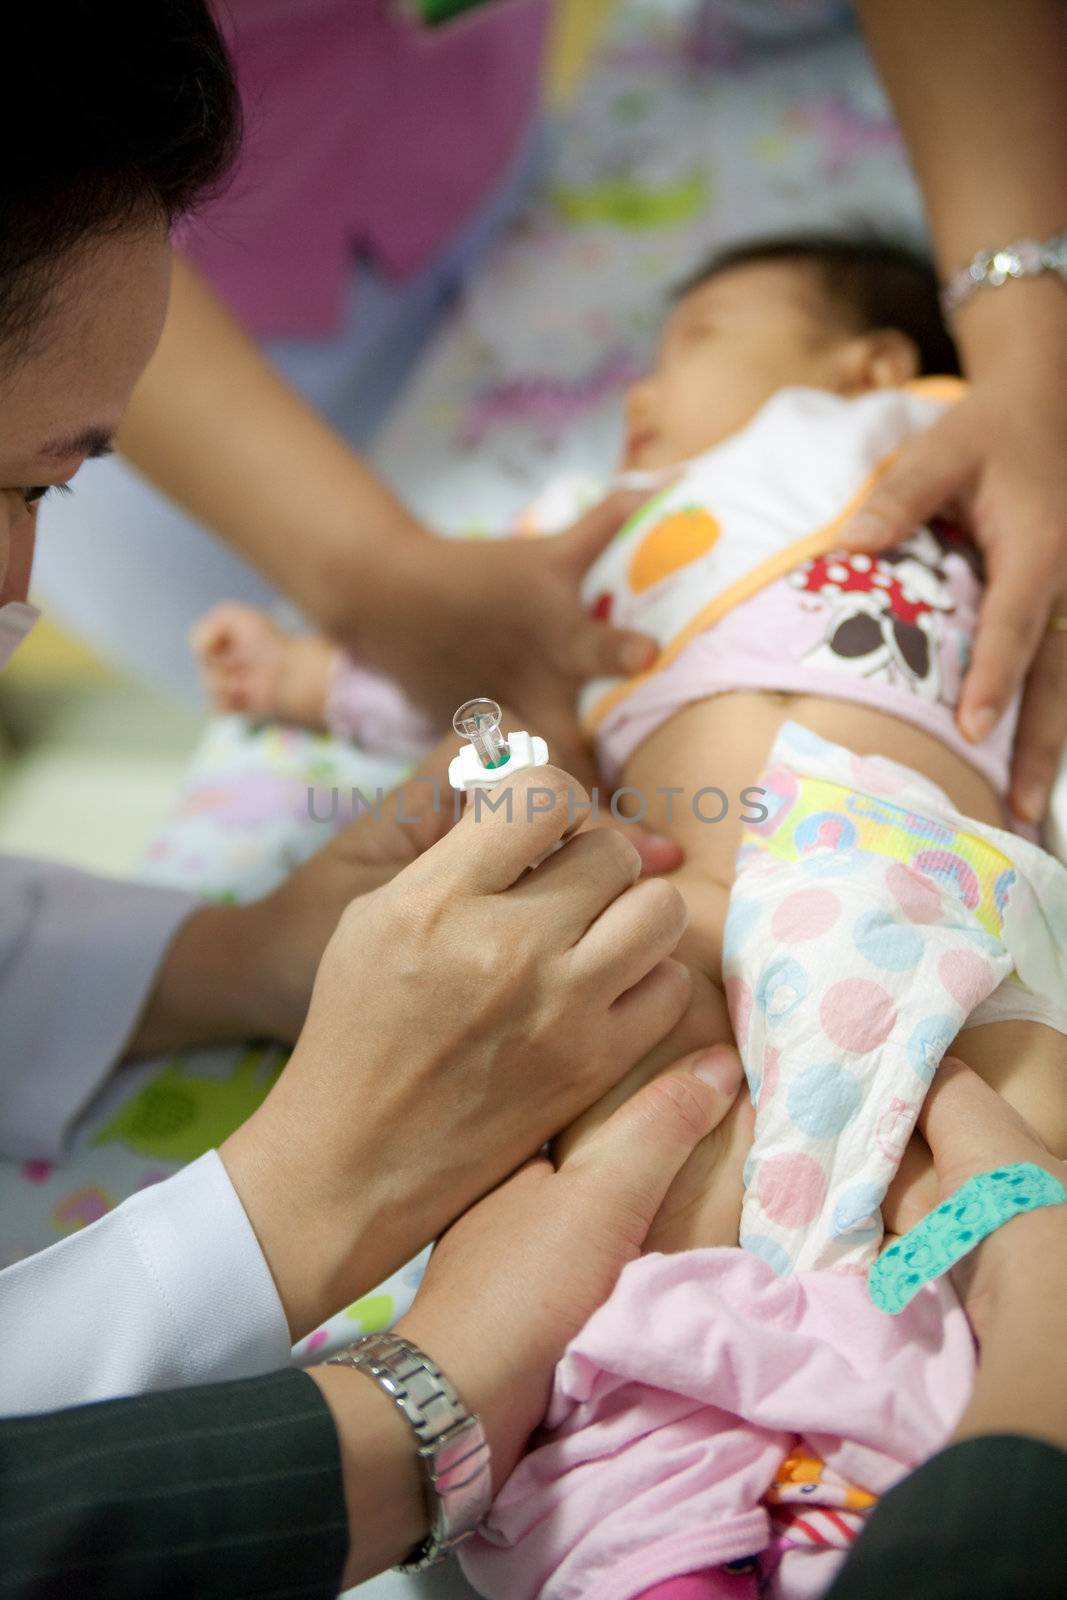 November4,2011:Doctor use a baby syringe.